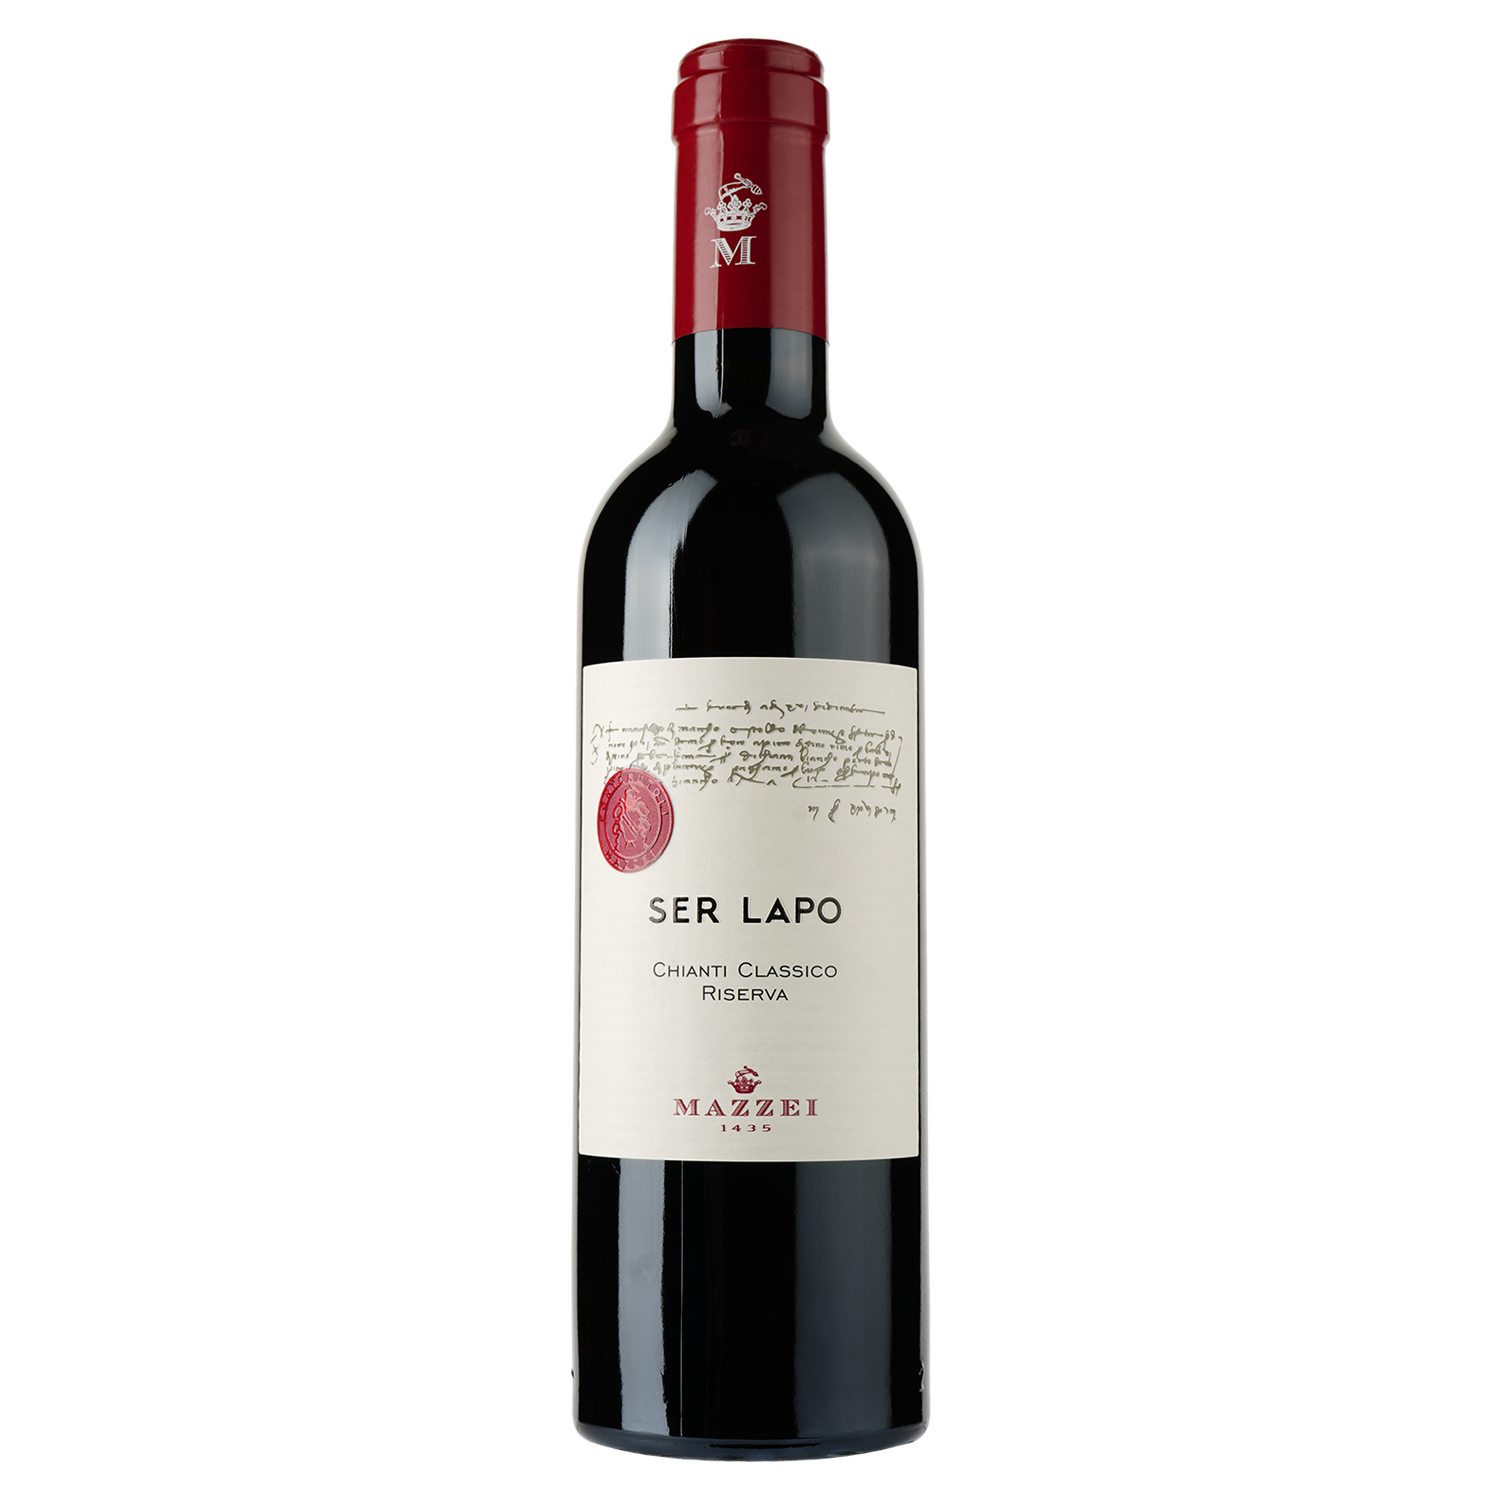 Вино Marchesi Mazzei Ser Lapo Chianti Classico Riserva DOCG, красное, сухое, 0,375 л - фото 1